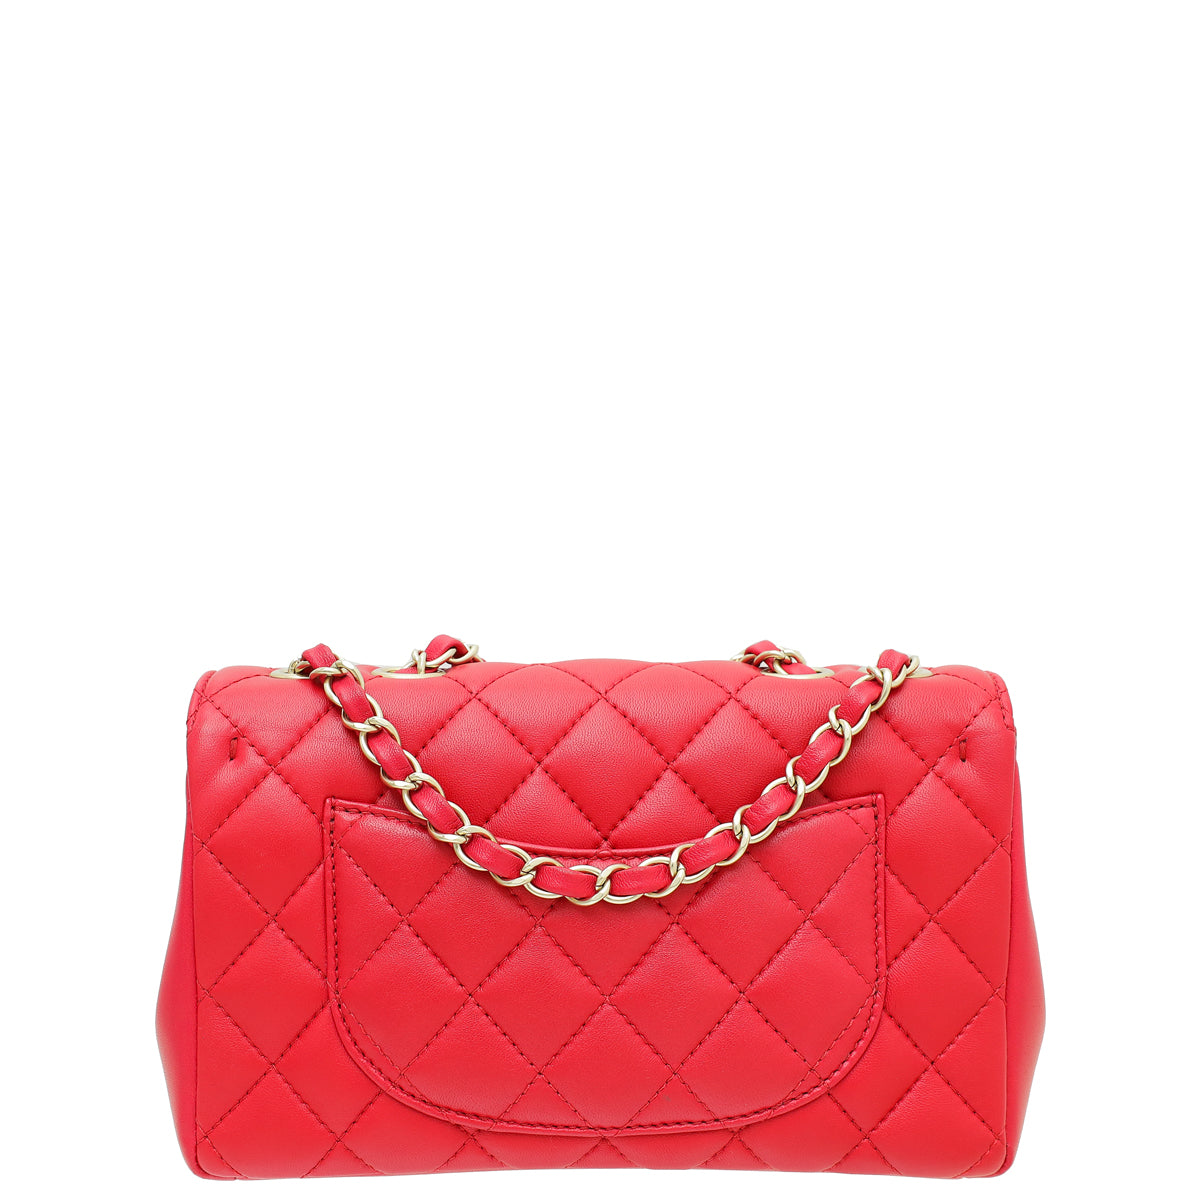 Chanel Bicolor Mini Mademoiselle Chic Flap Bag